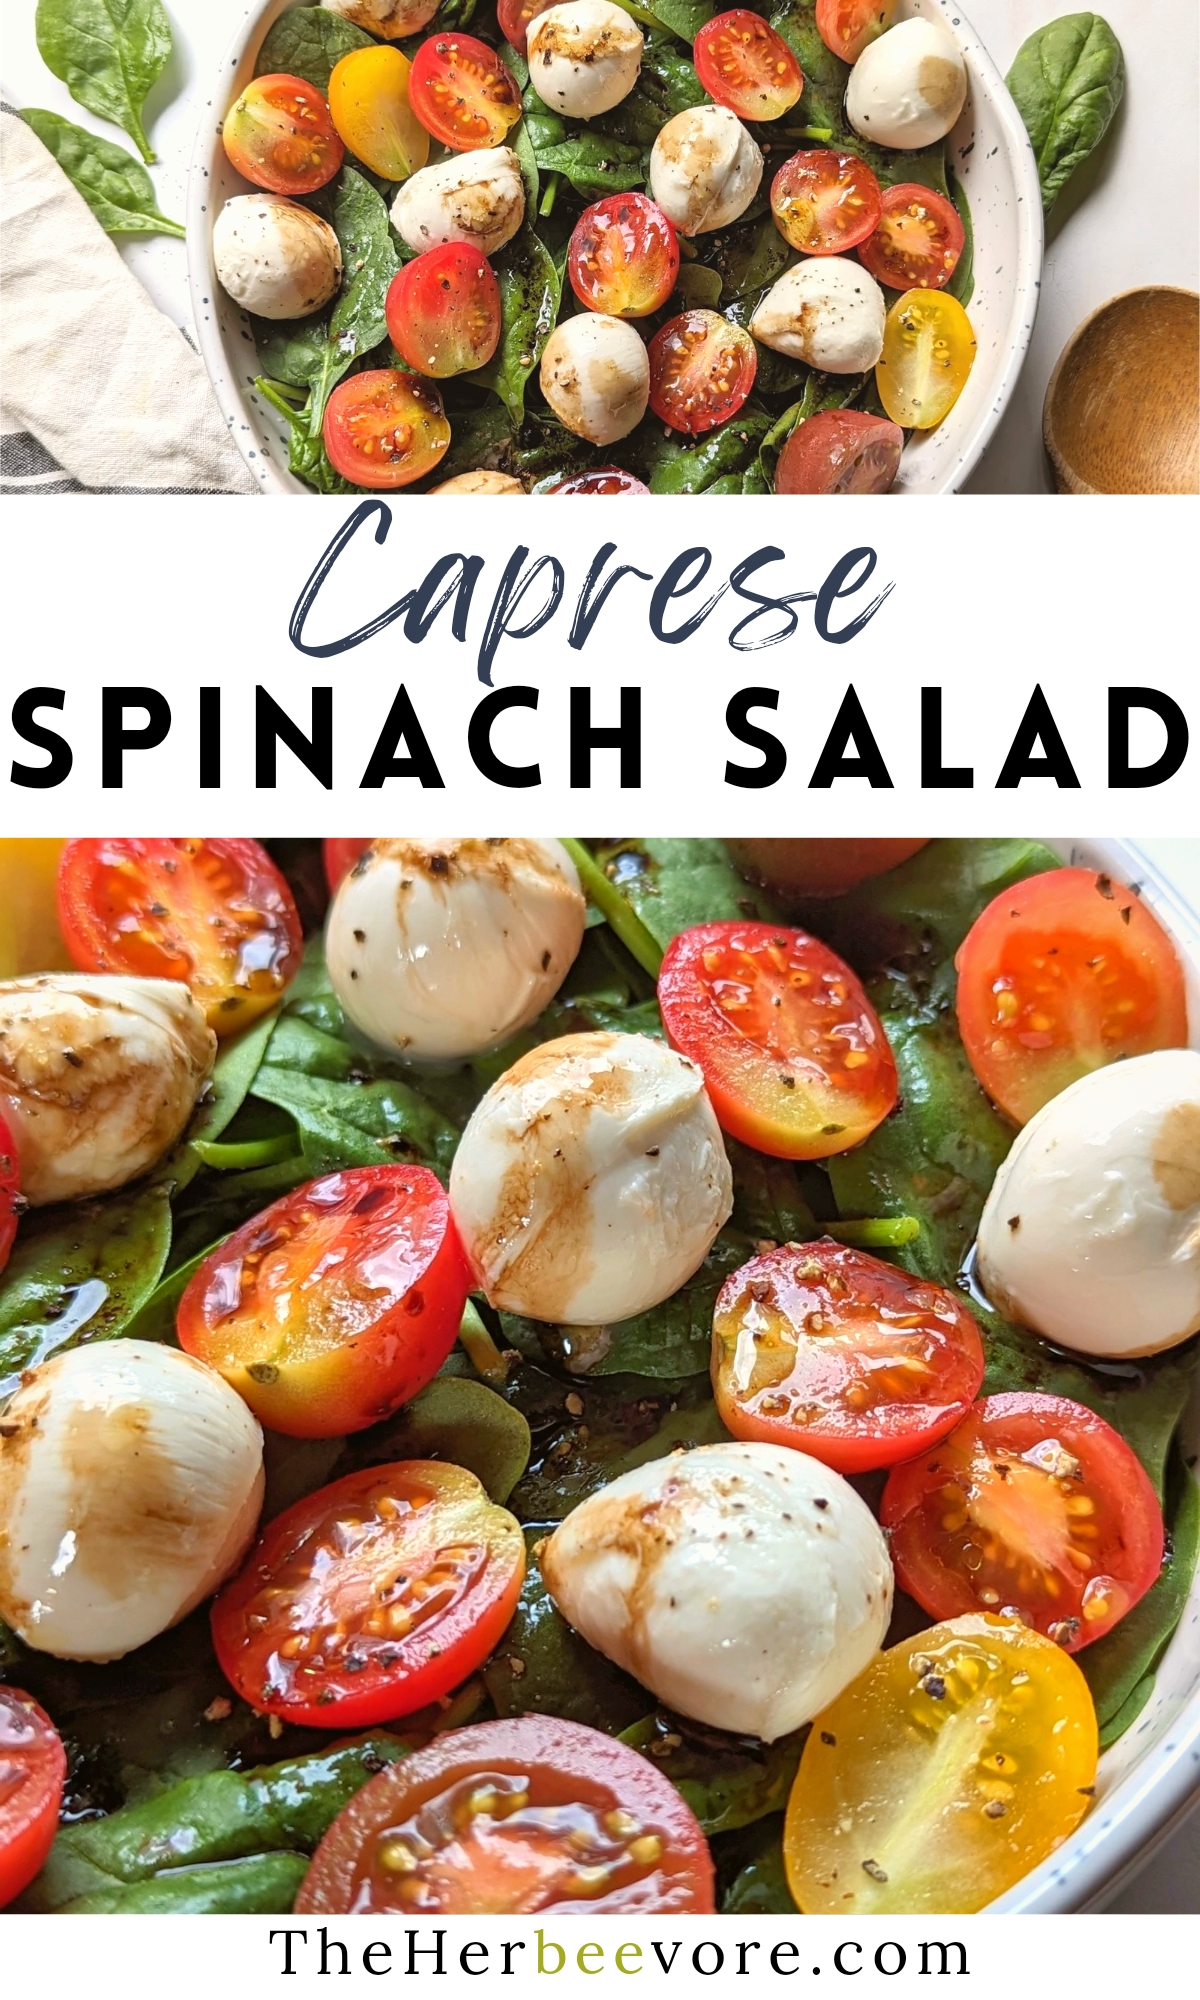 caprese spinach salad recipe with balsamic vinaigrette dressing